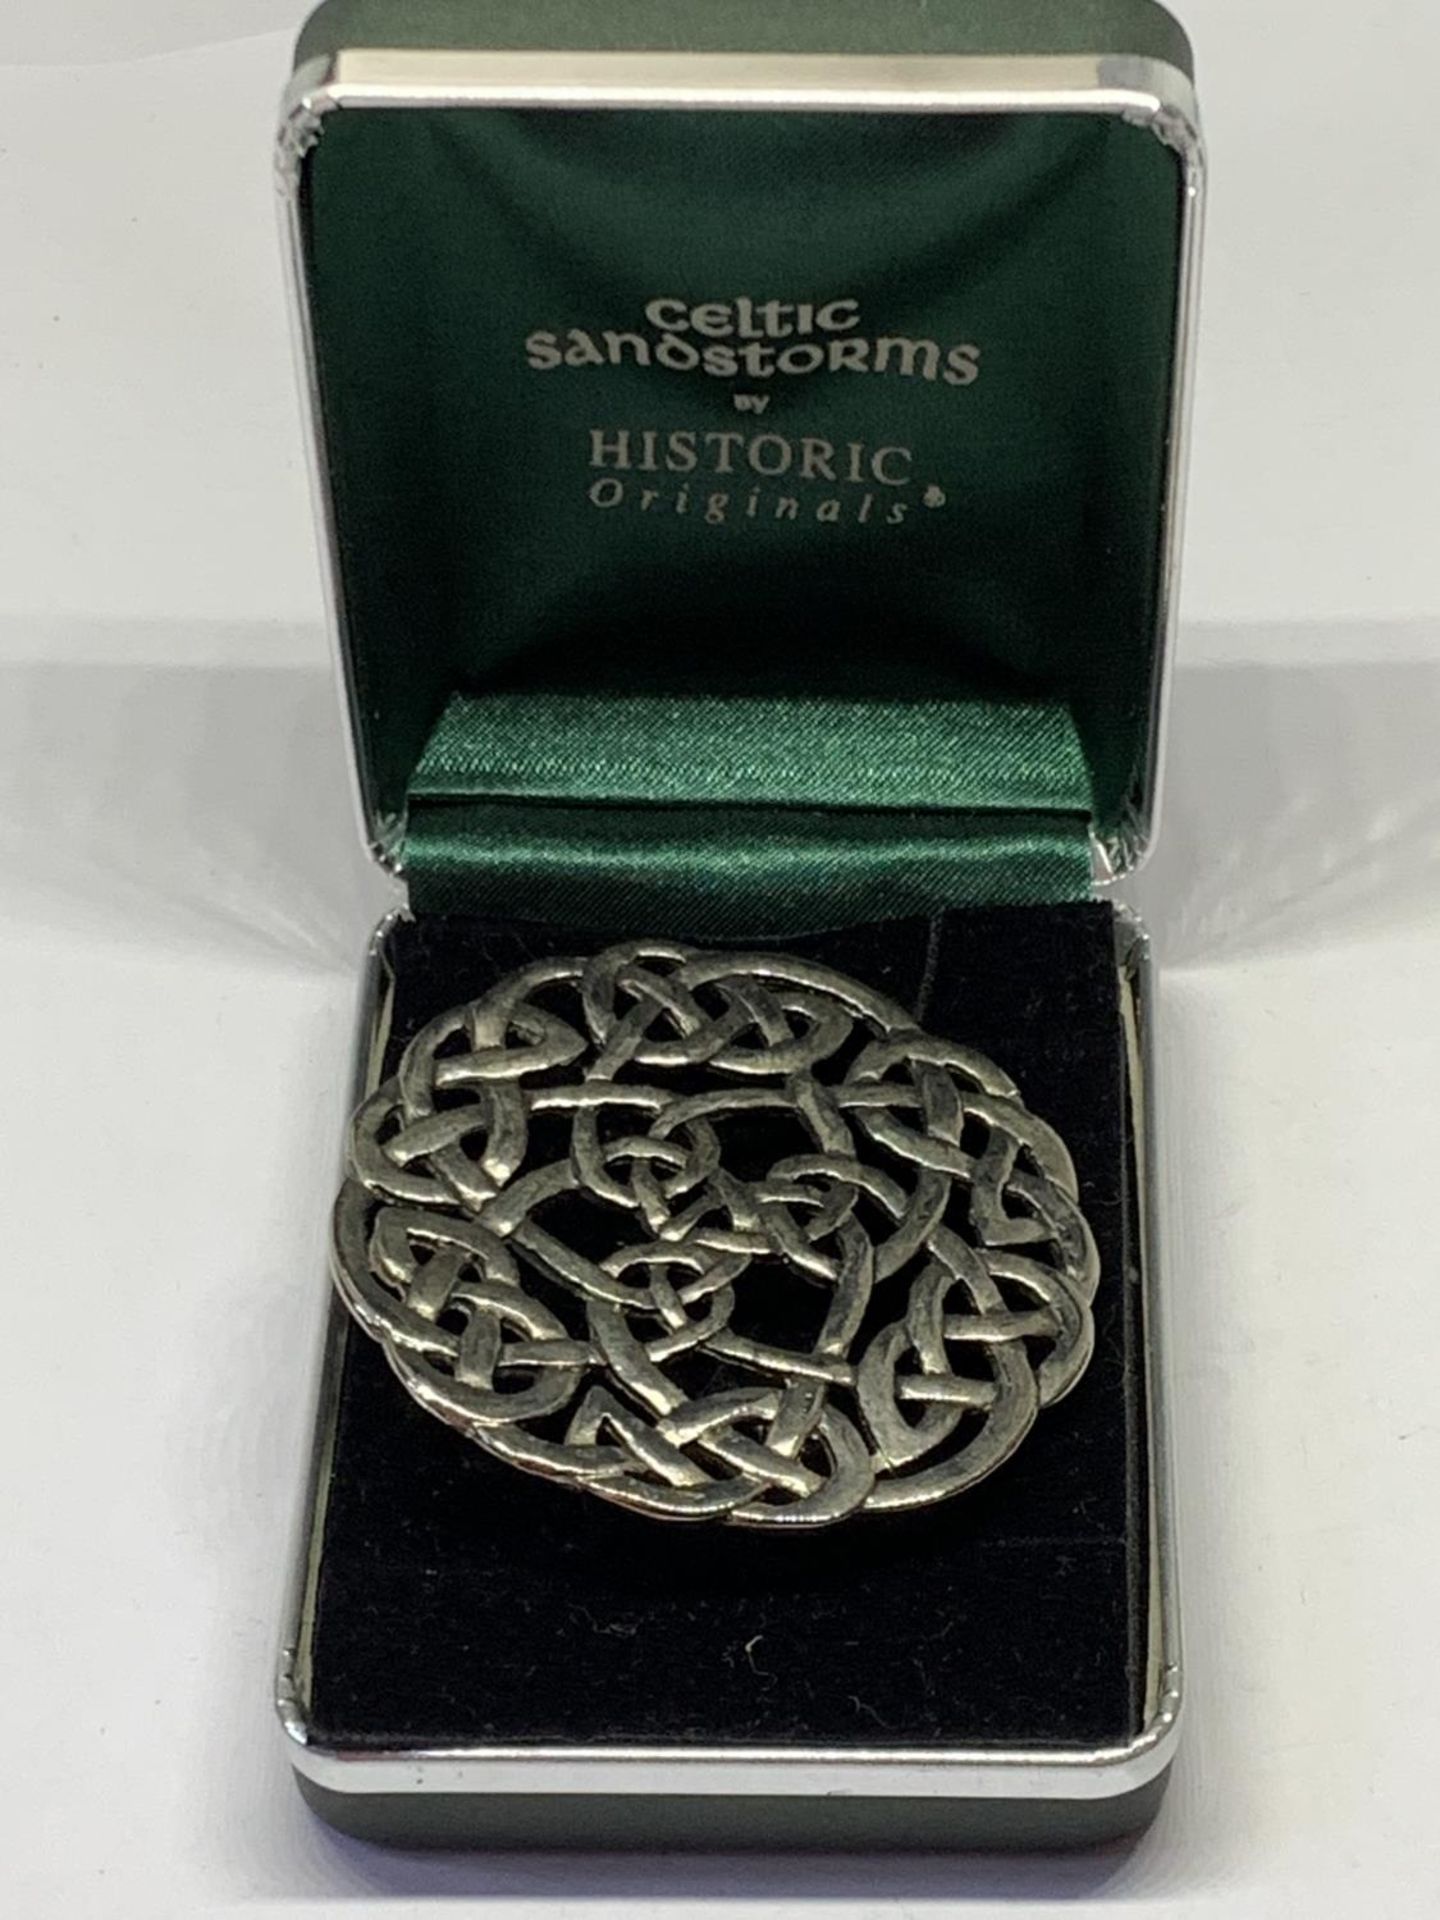 AN IRISH CELTIC BROOCH IN A PRESENTATION BOX